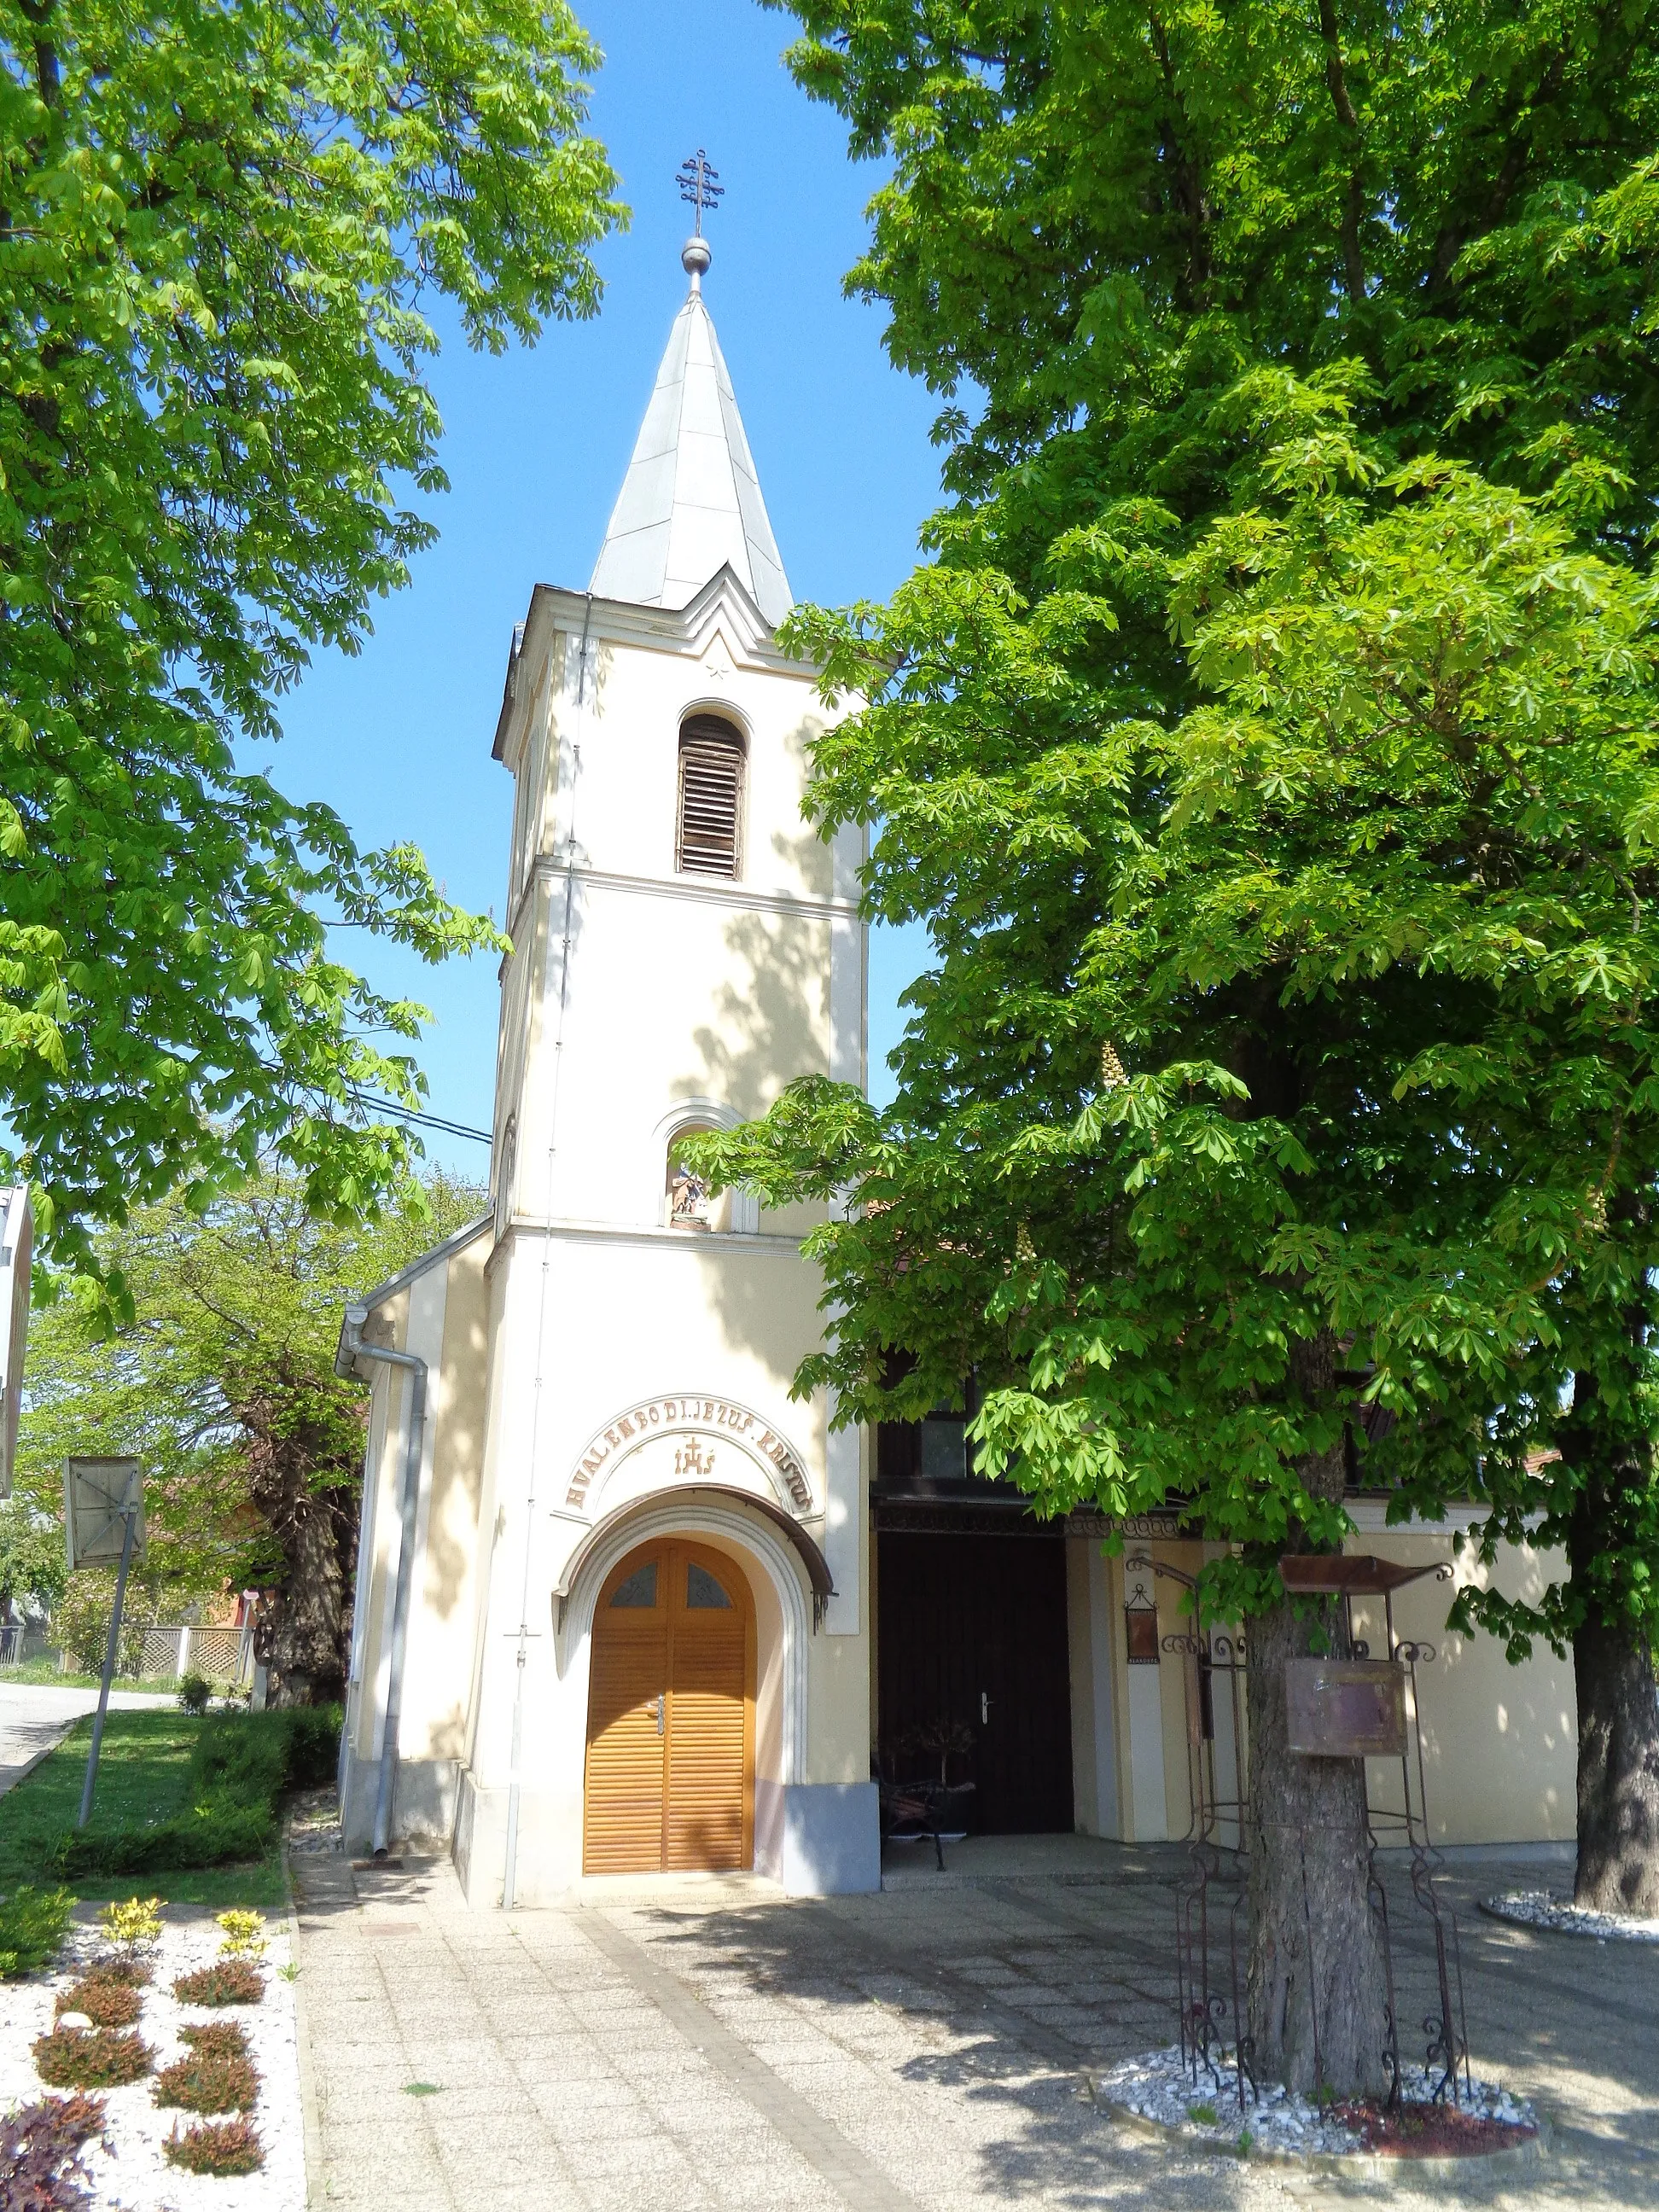 Photo showing: Slakovec village, Nedelišće municipality, Međimurje County, Croatia - church